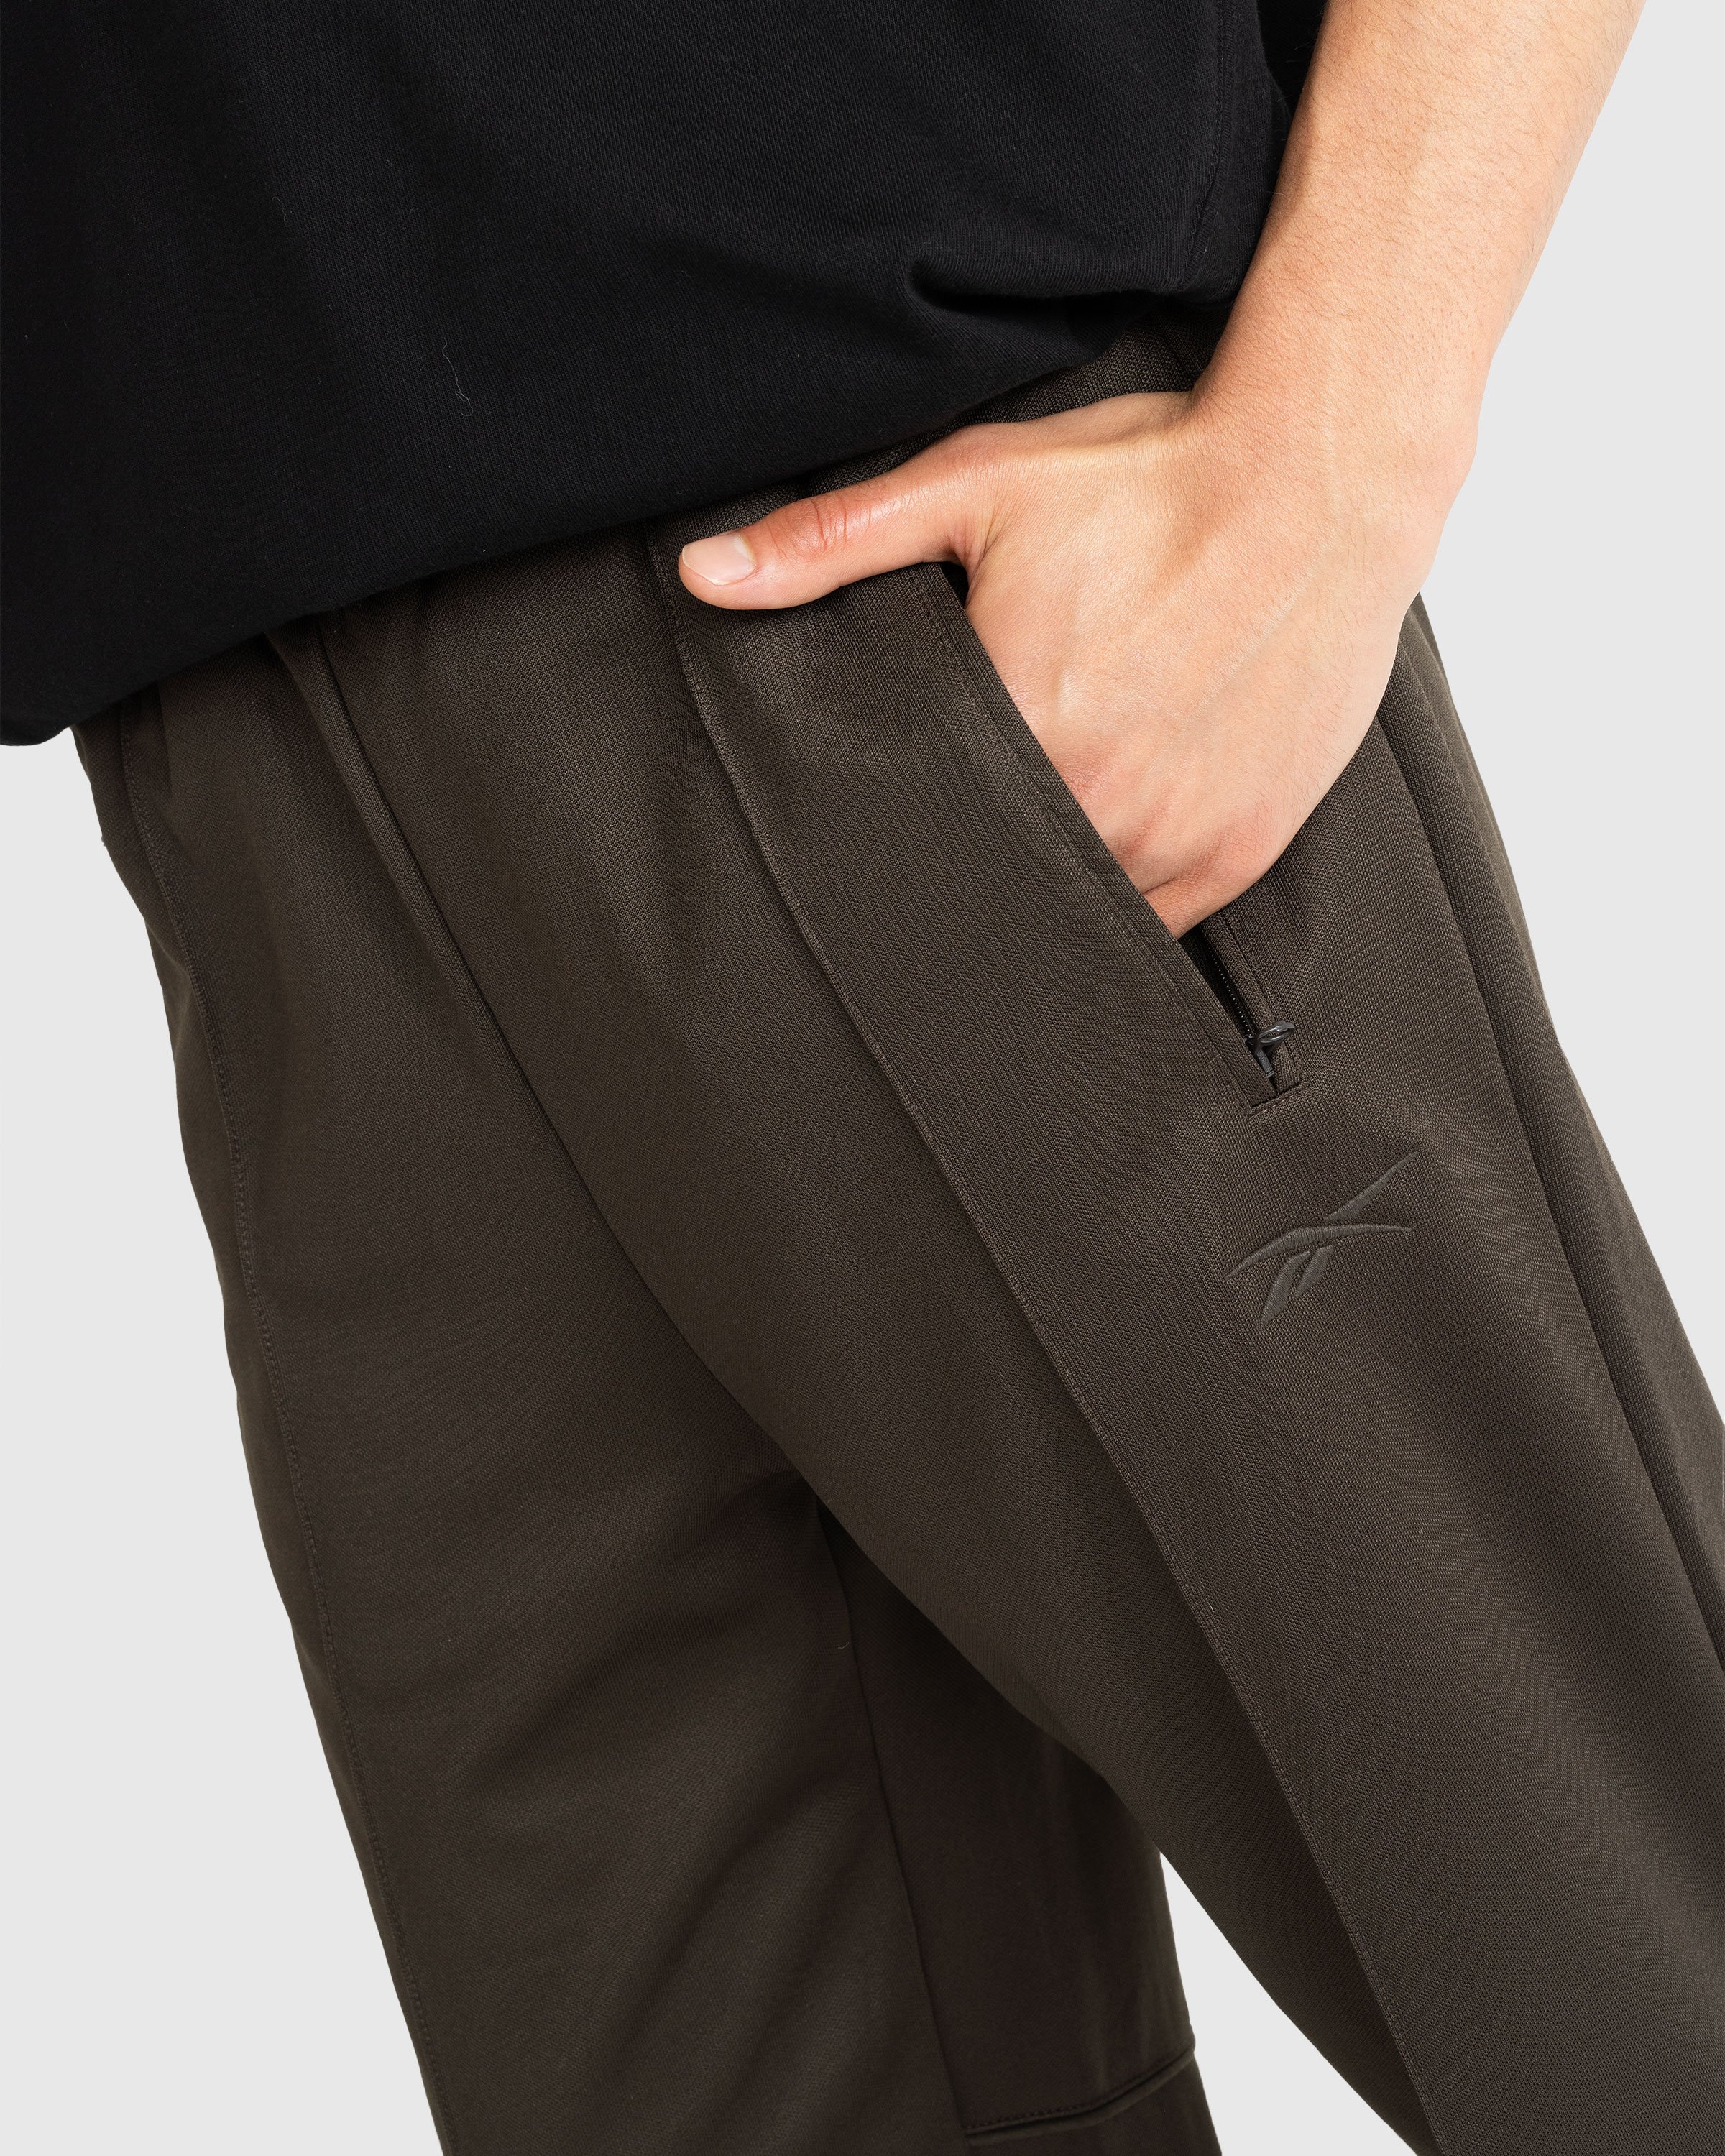 Reebok - Piped Track Pants Moro - Clothing - Brown - Image 4